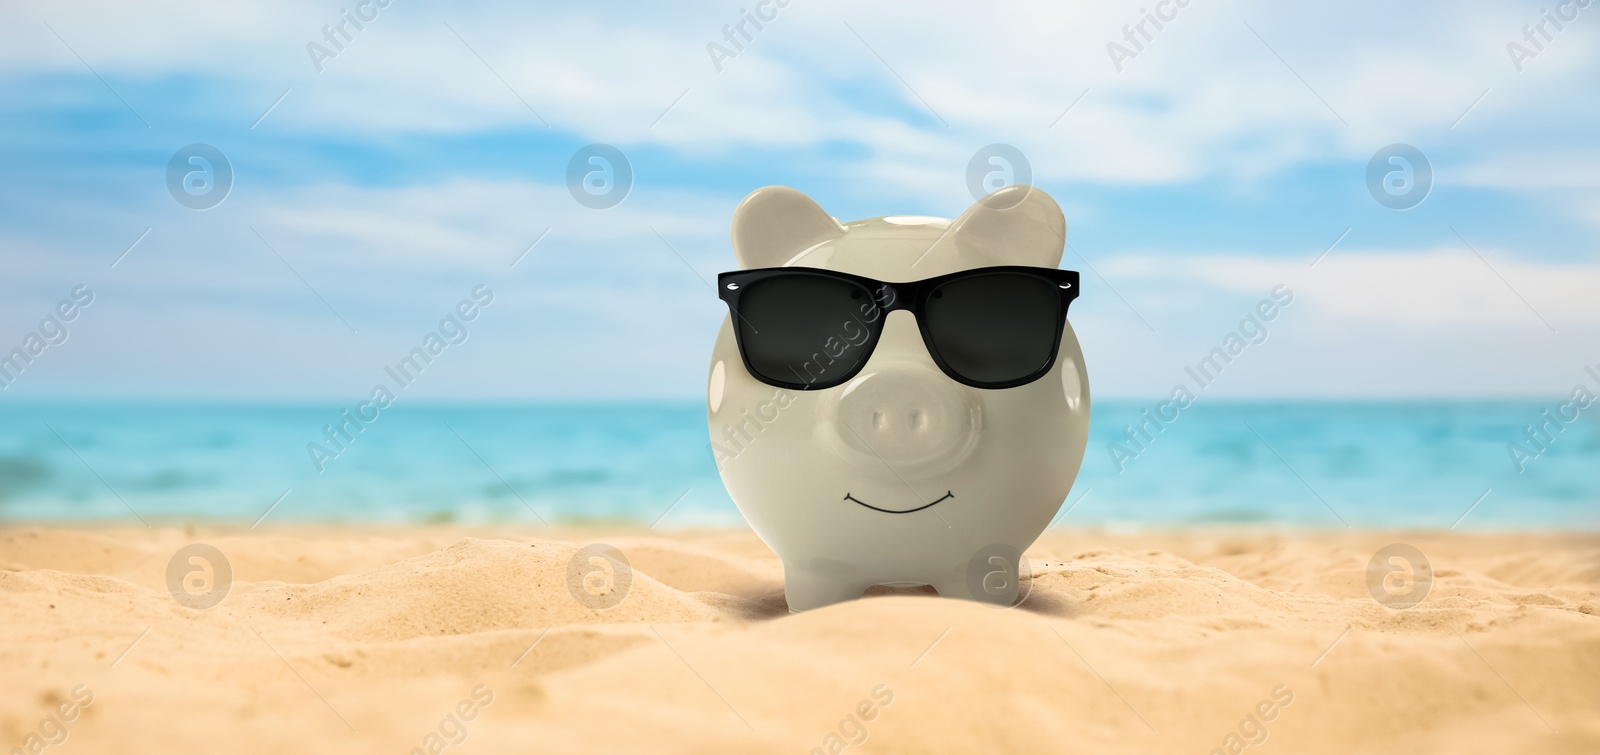 Image of Vacation savings. Piggy bank with sunglasses on sandy beach near sea, banner design